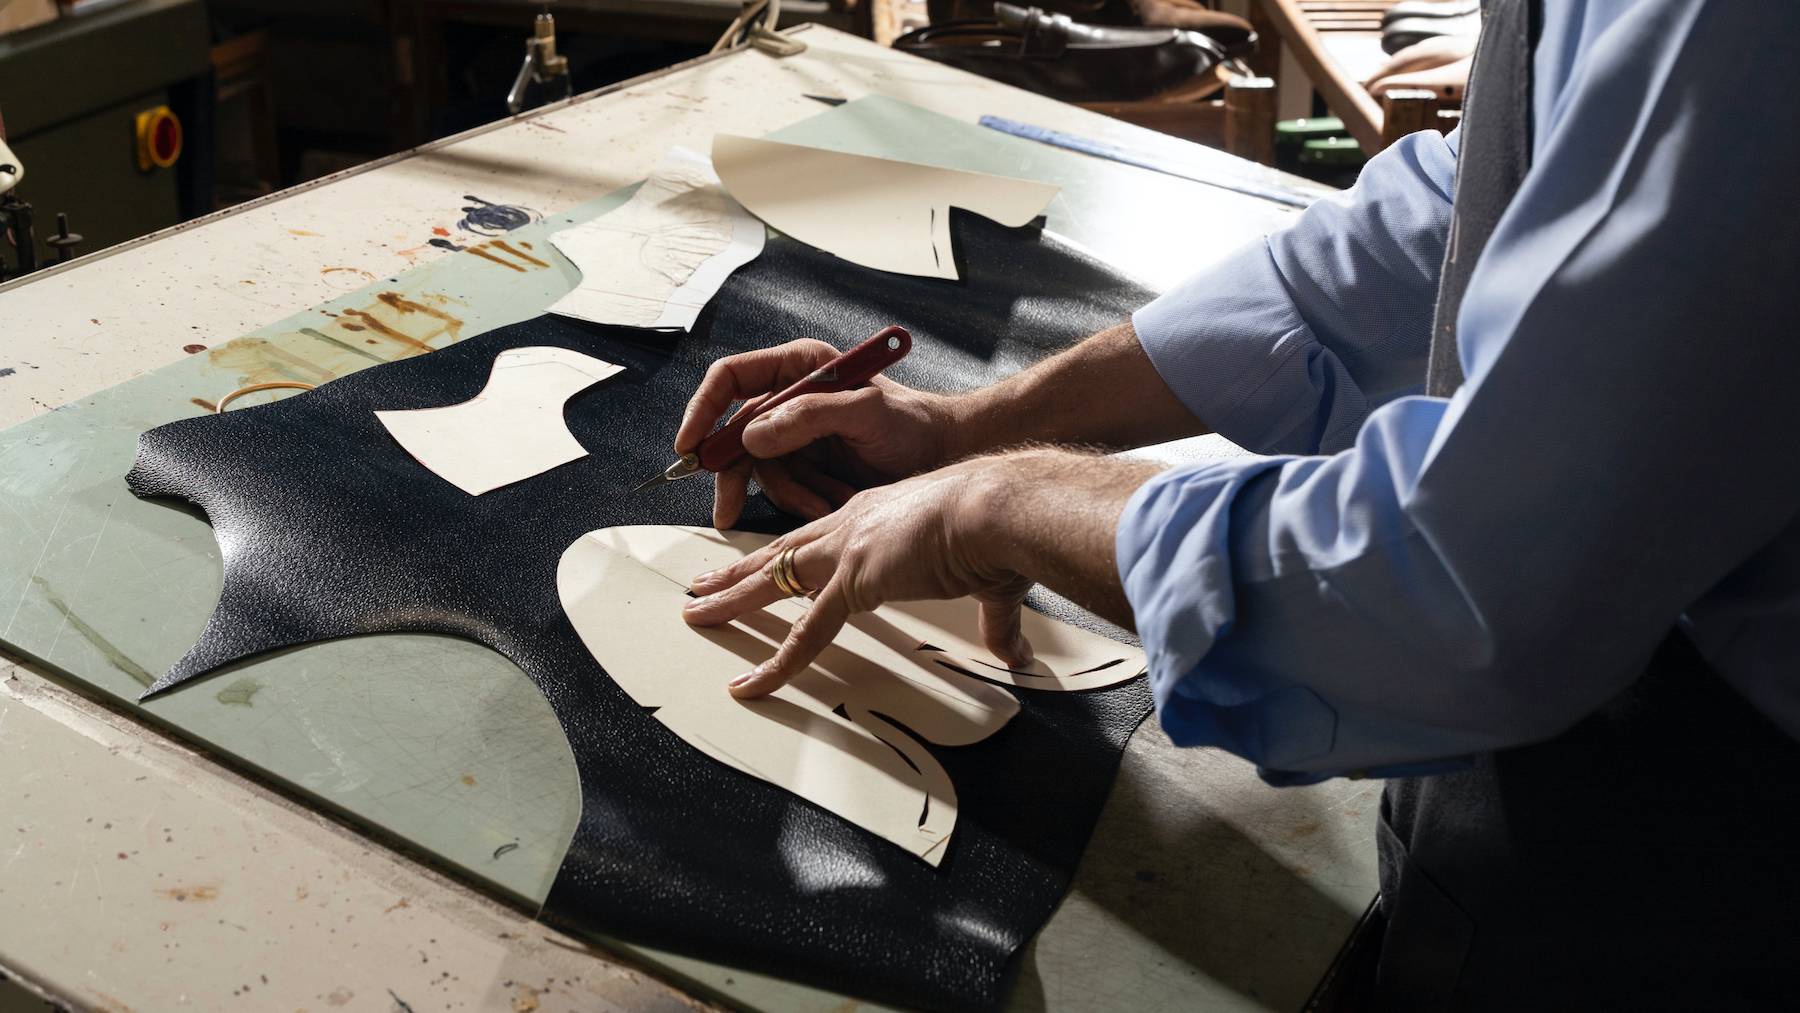 Craftsperson working in an Italian shoe factory.